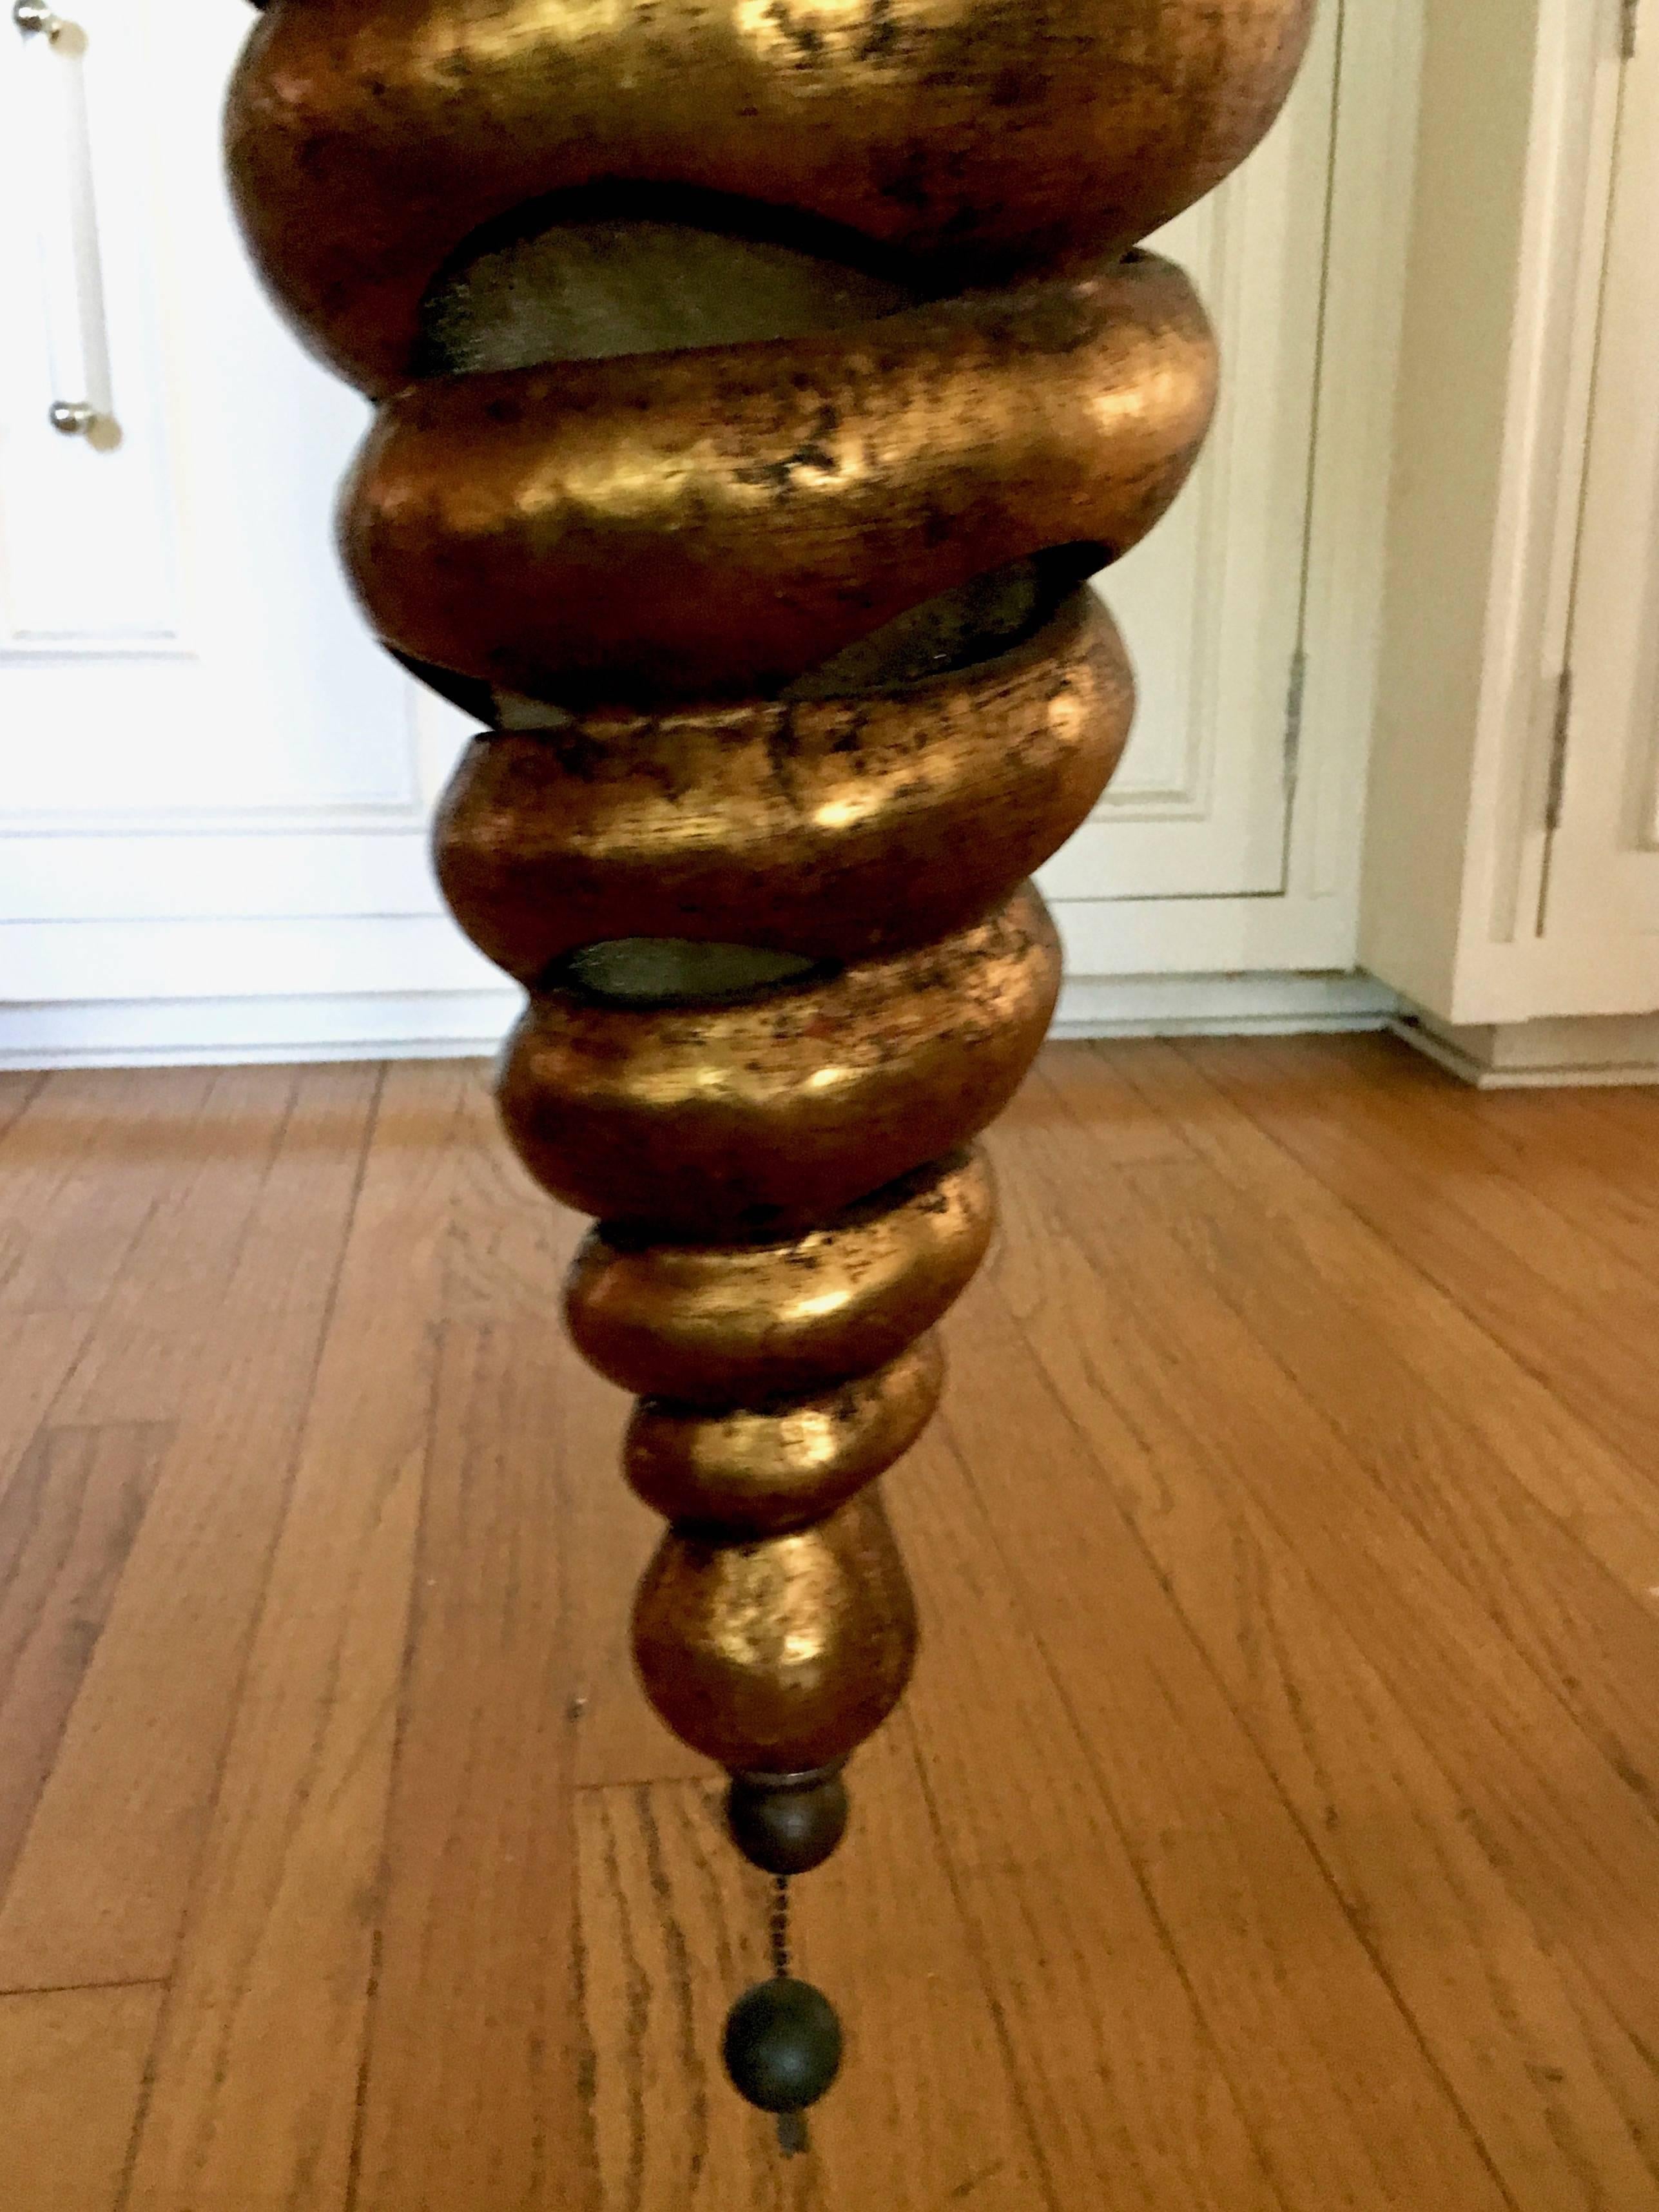 Mid-Century gilt spiral pendant lamp 6' chain cord. Mica insert creating warm glow.